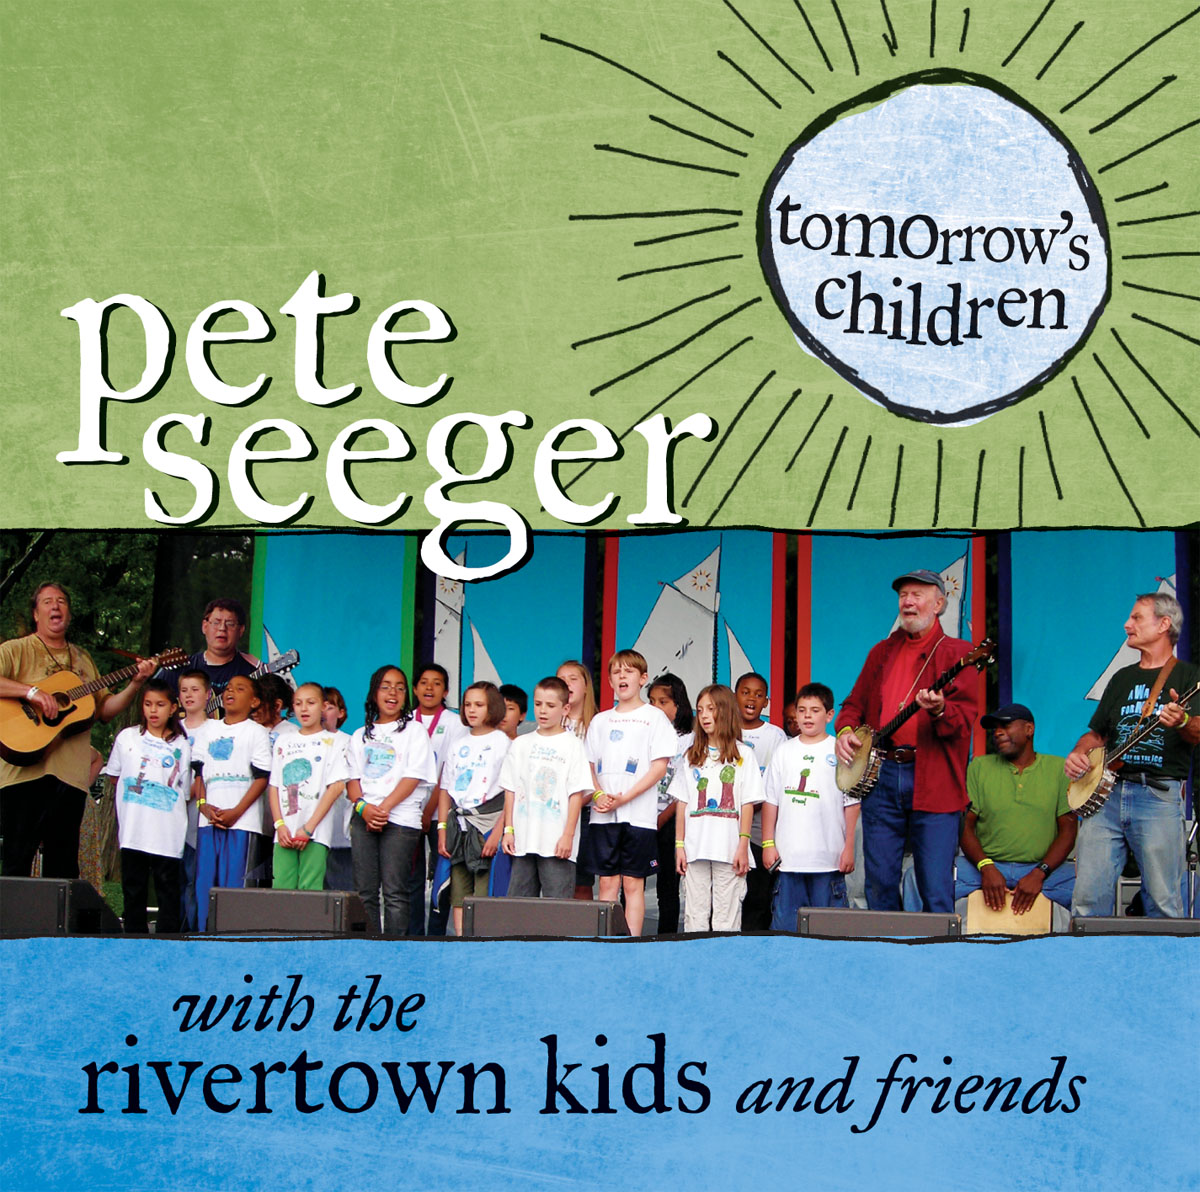 Pete Seeger Preps Tomorrow’s Children